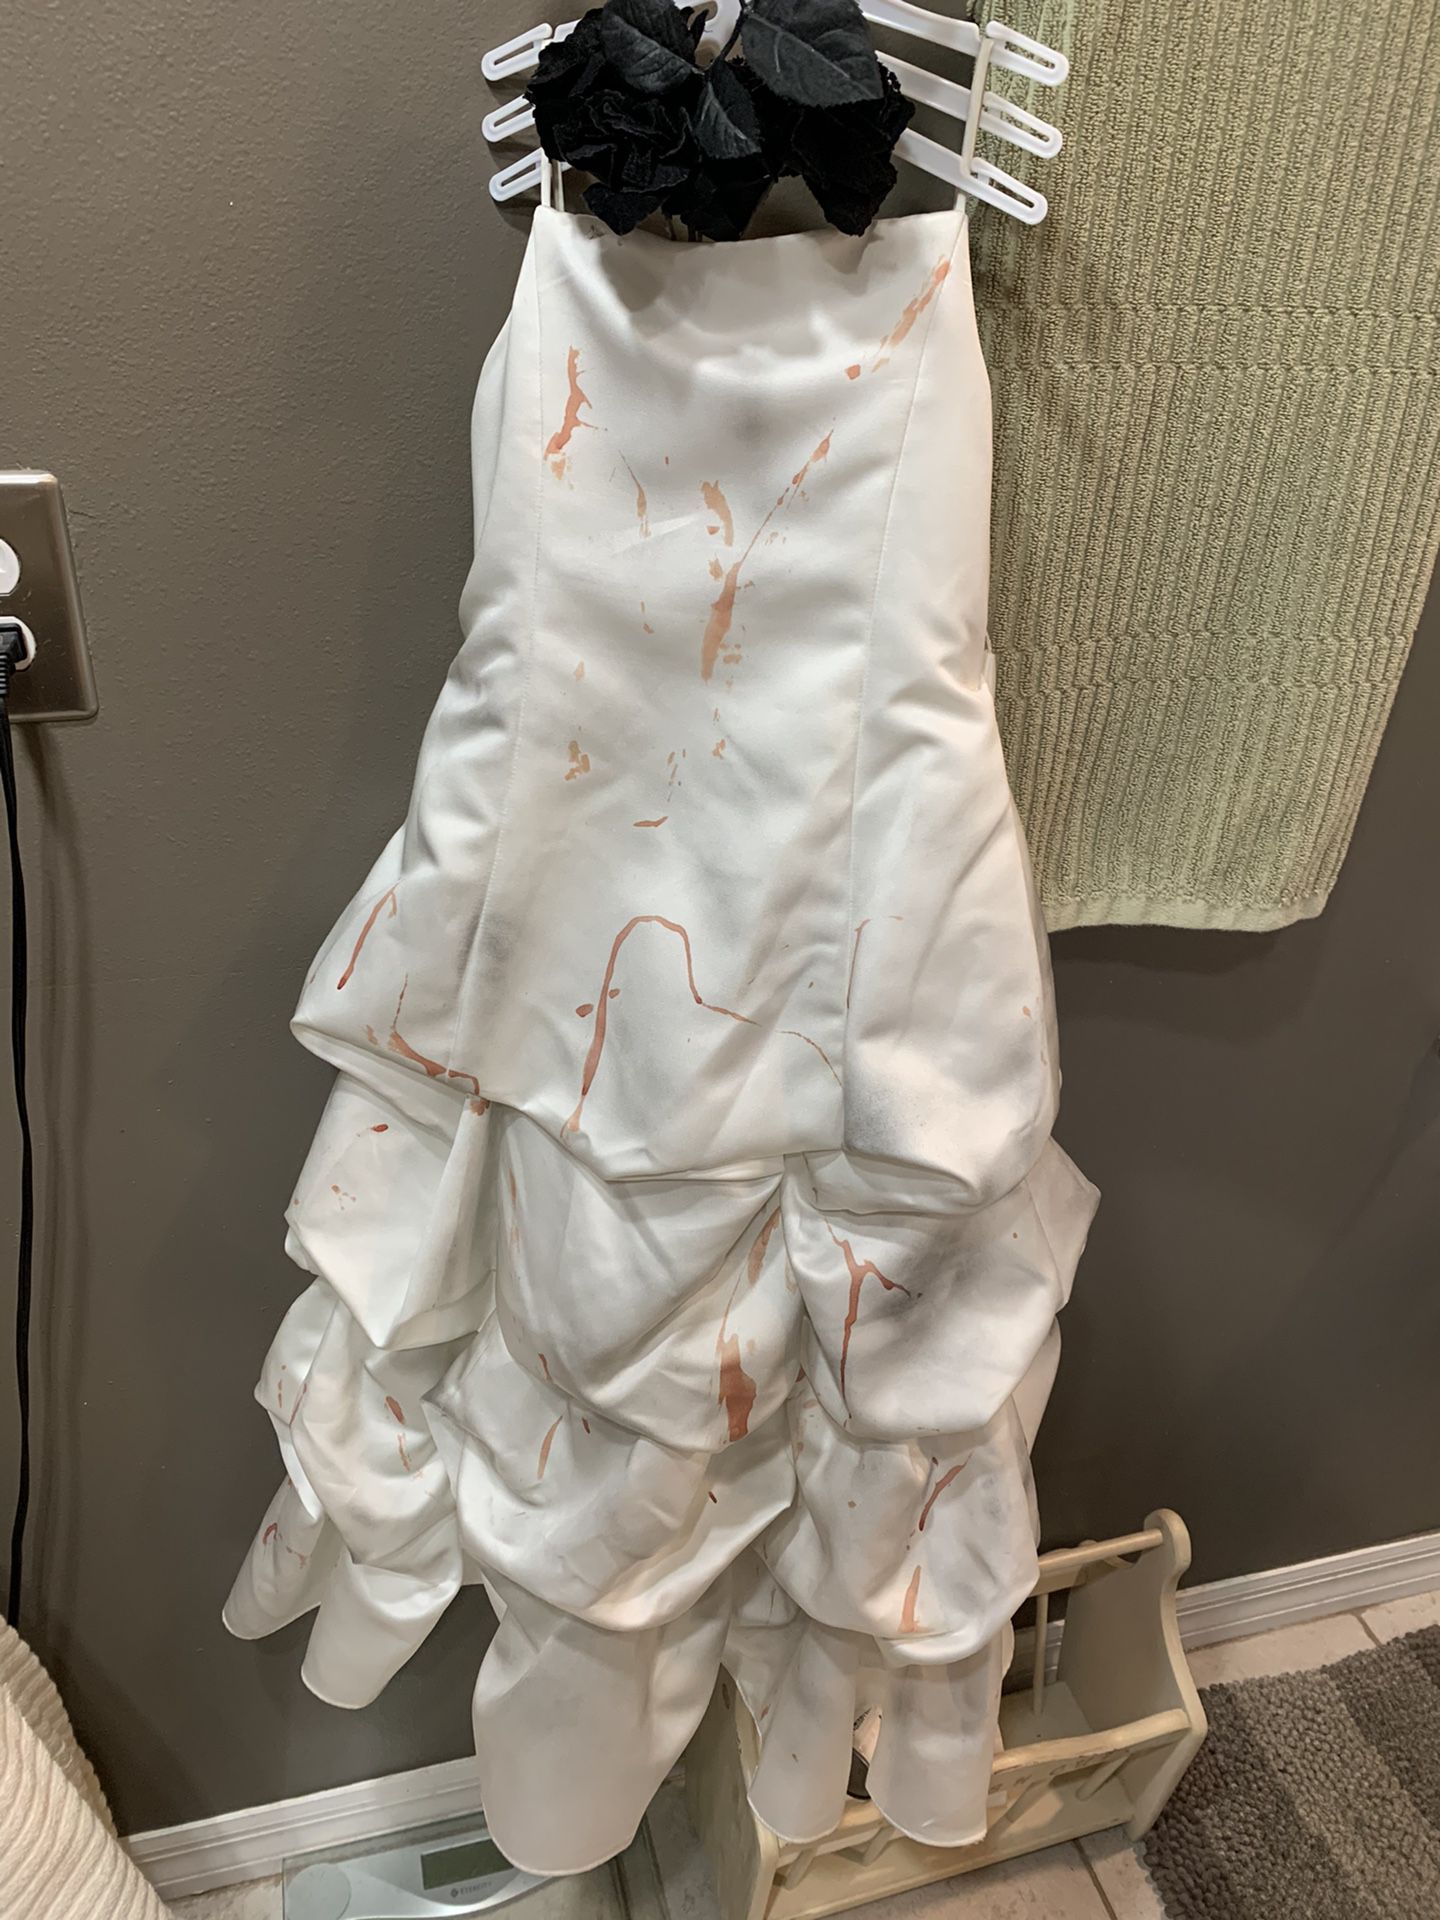 Zombie bride dress costume